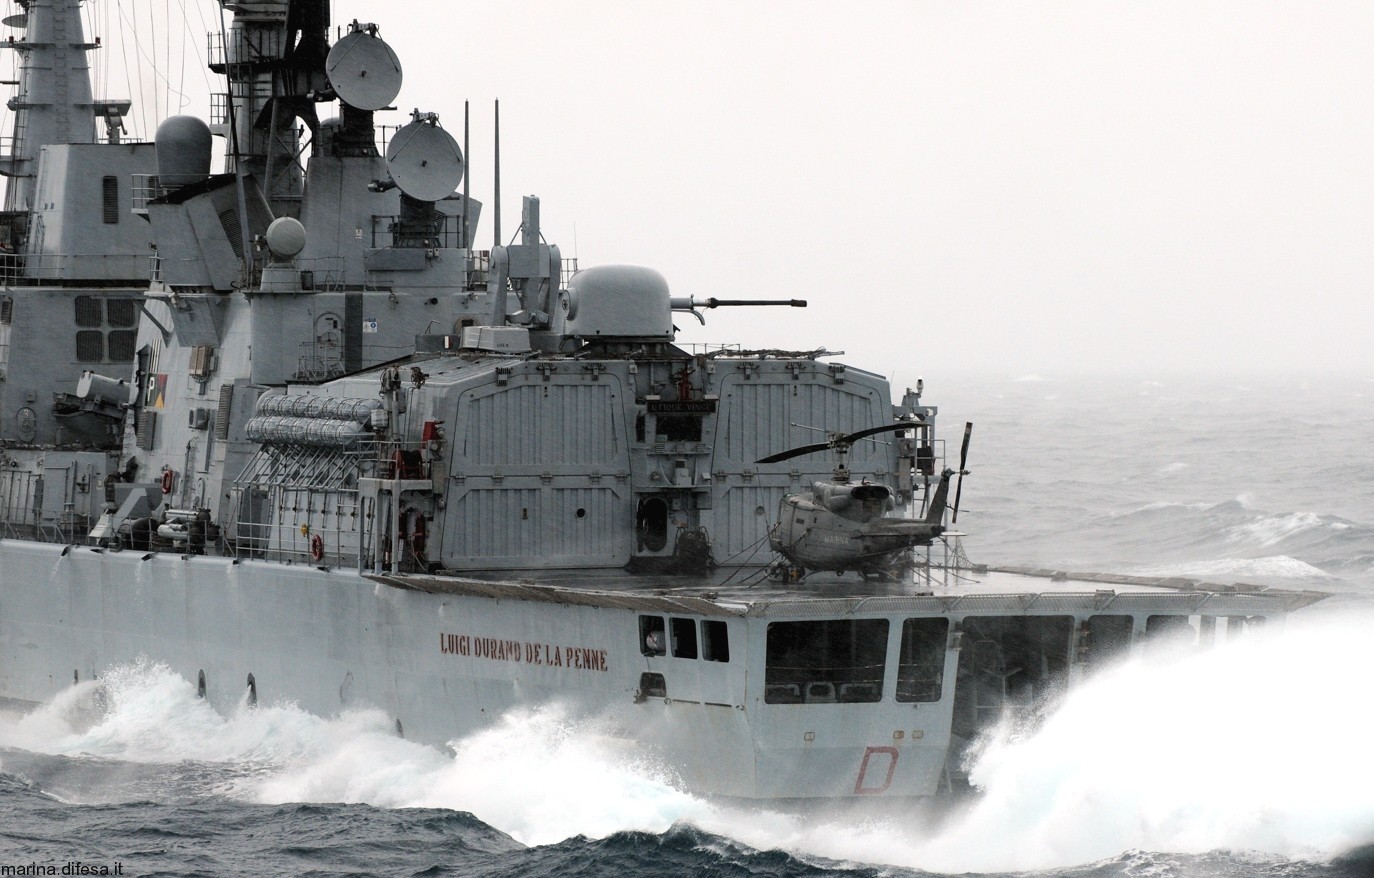 d-560 luigi durand de la penne its nave guided missile destroyer ddg italian navy marina militare 35